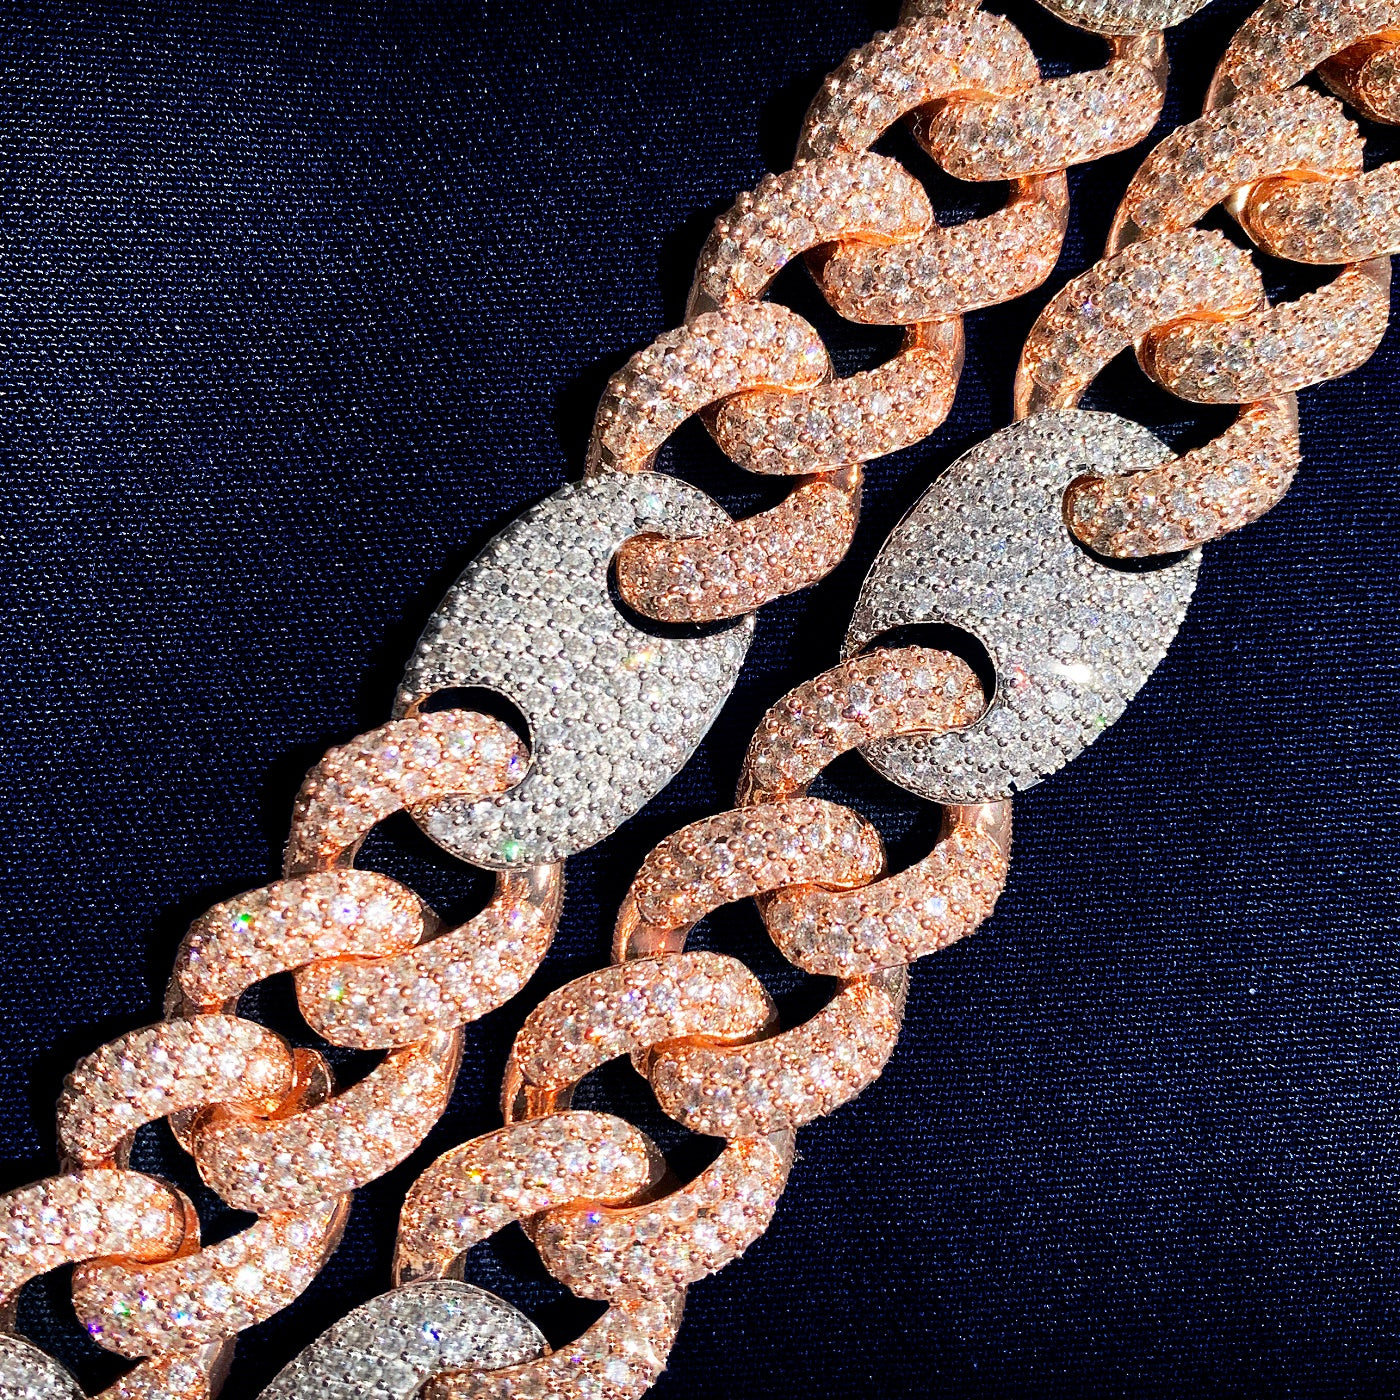 18MM Colorful Miami Cuban Chain Necklace